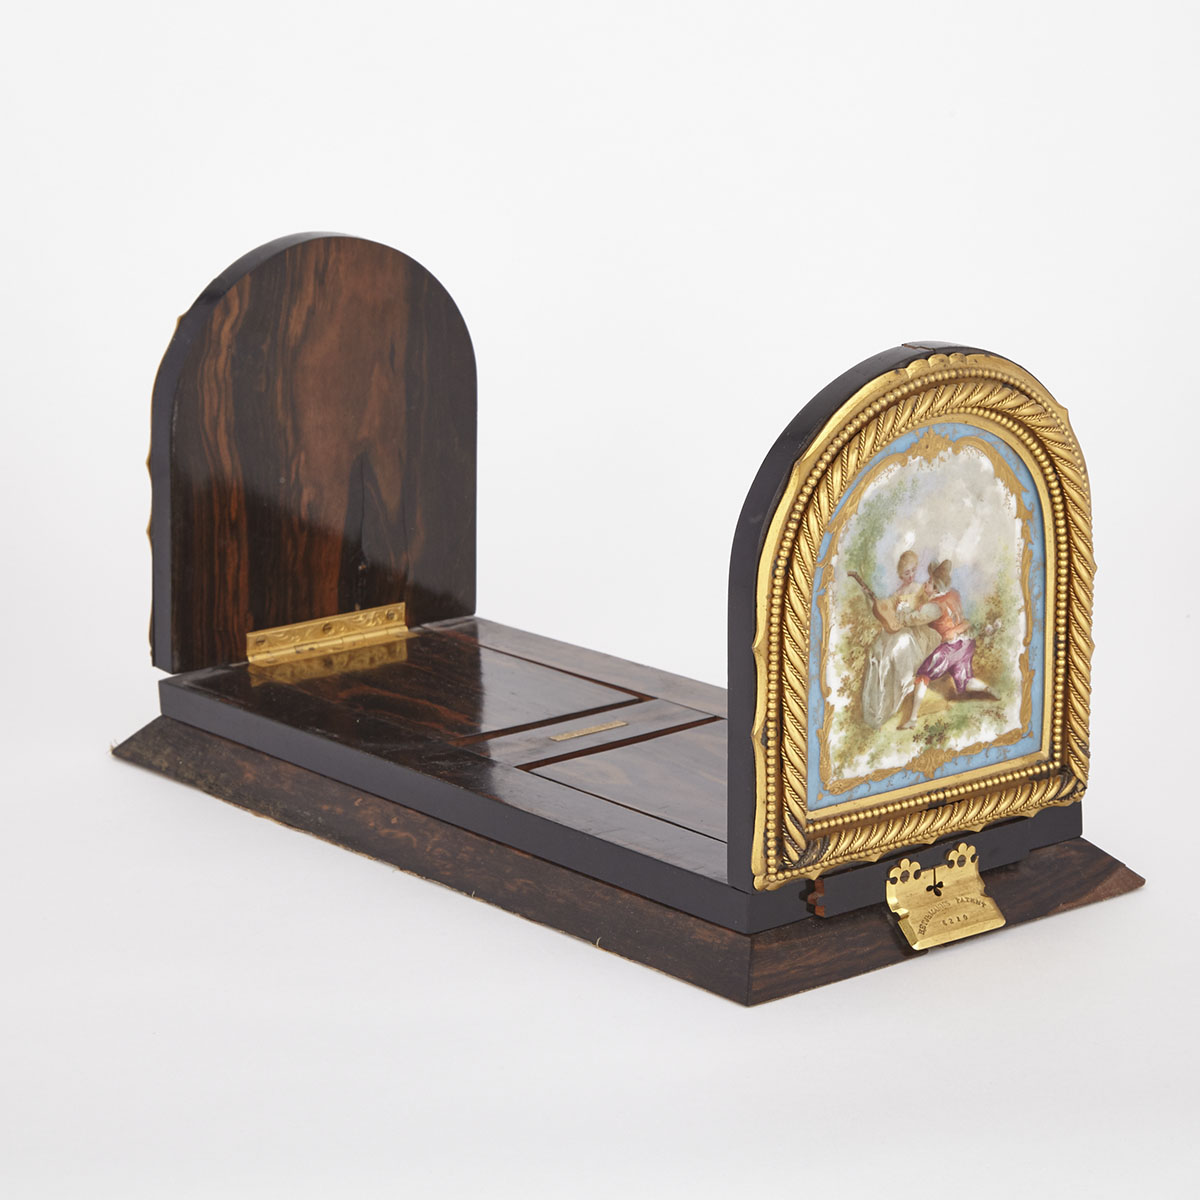 Victorian ‘Betjemann’s Patent’ Porcelain and Ormolu Mounted Coromandel Self Closing Book Slide, c.1880